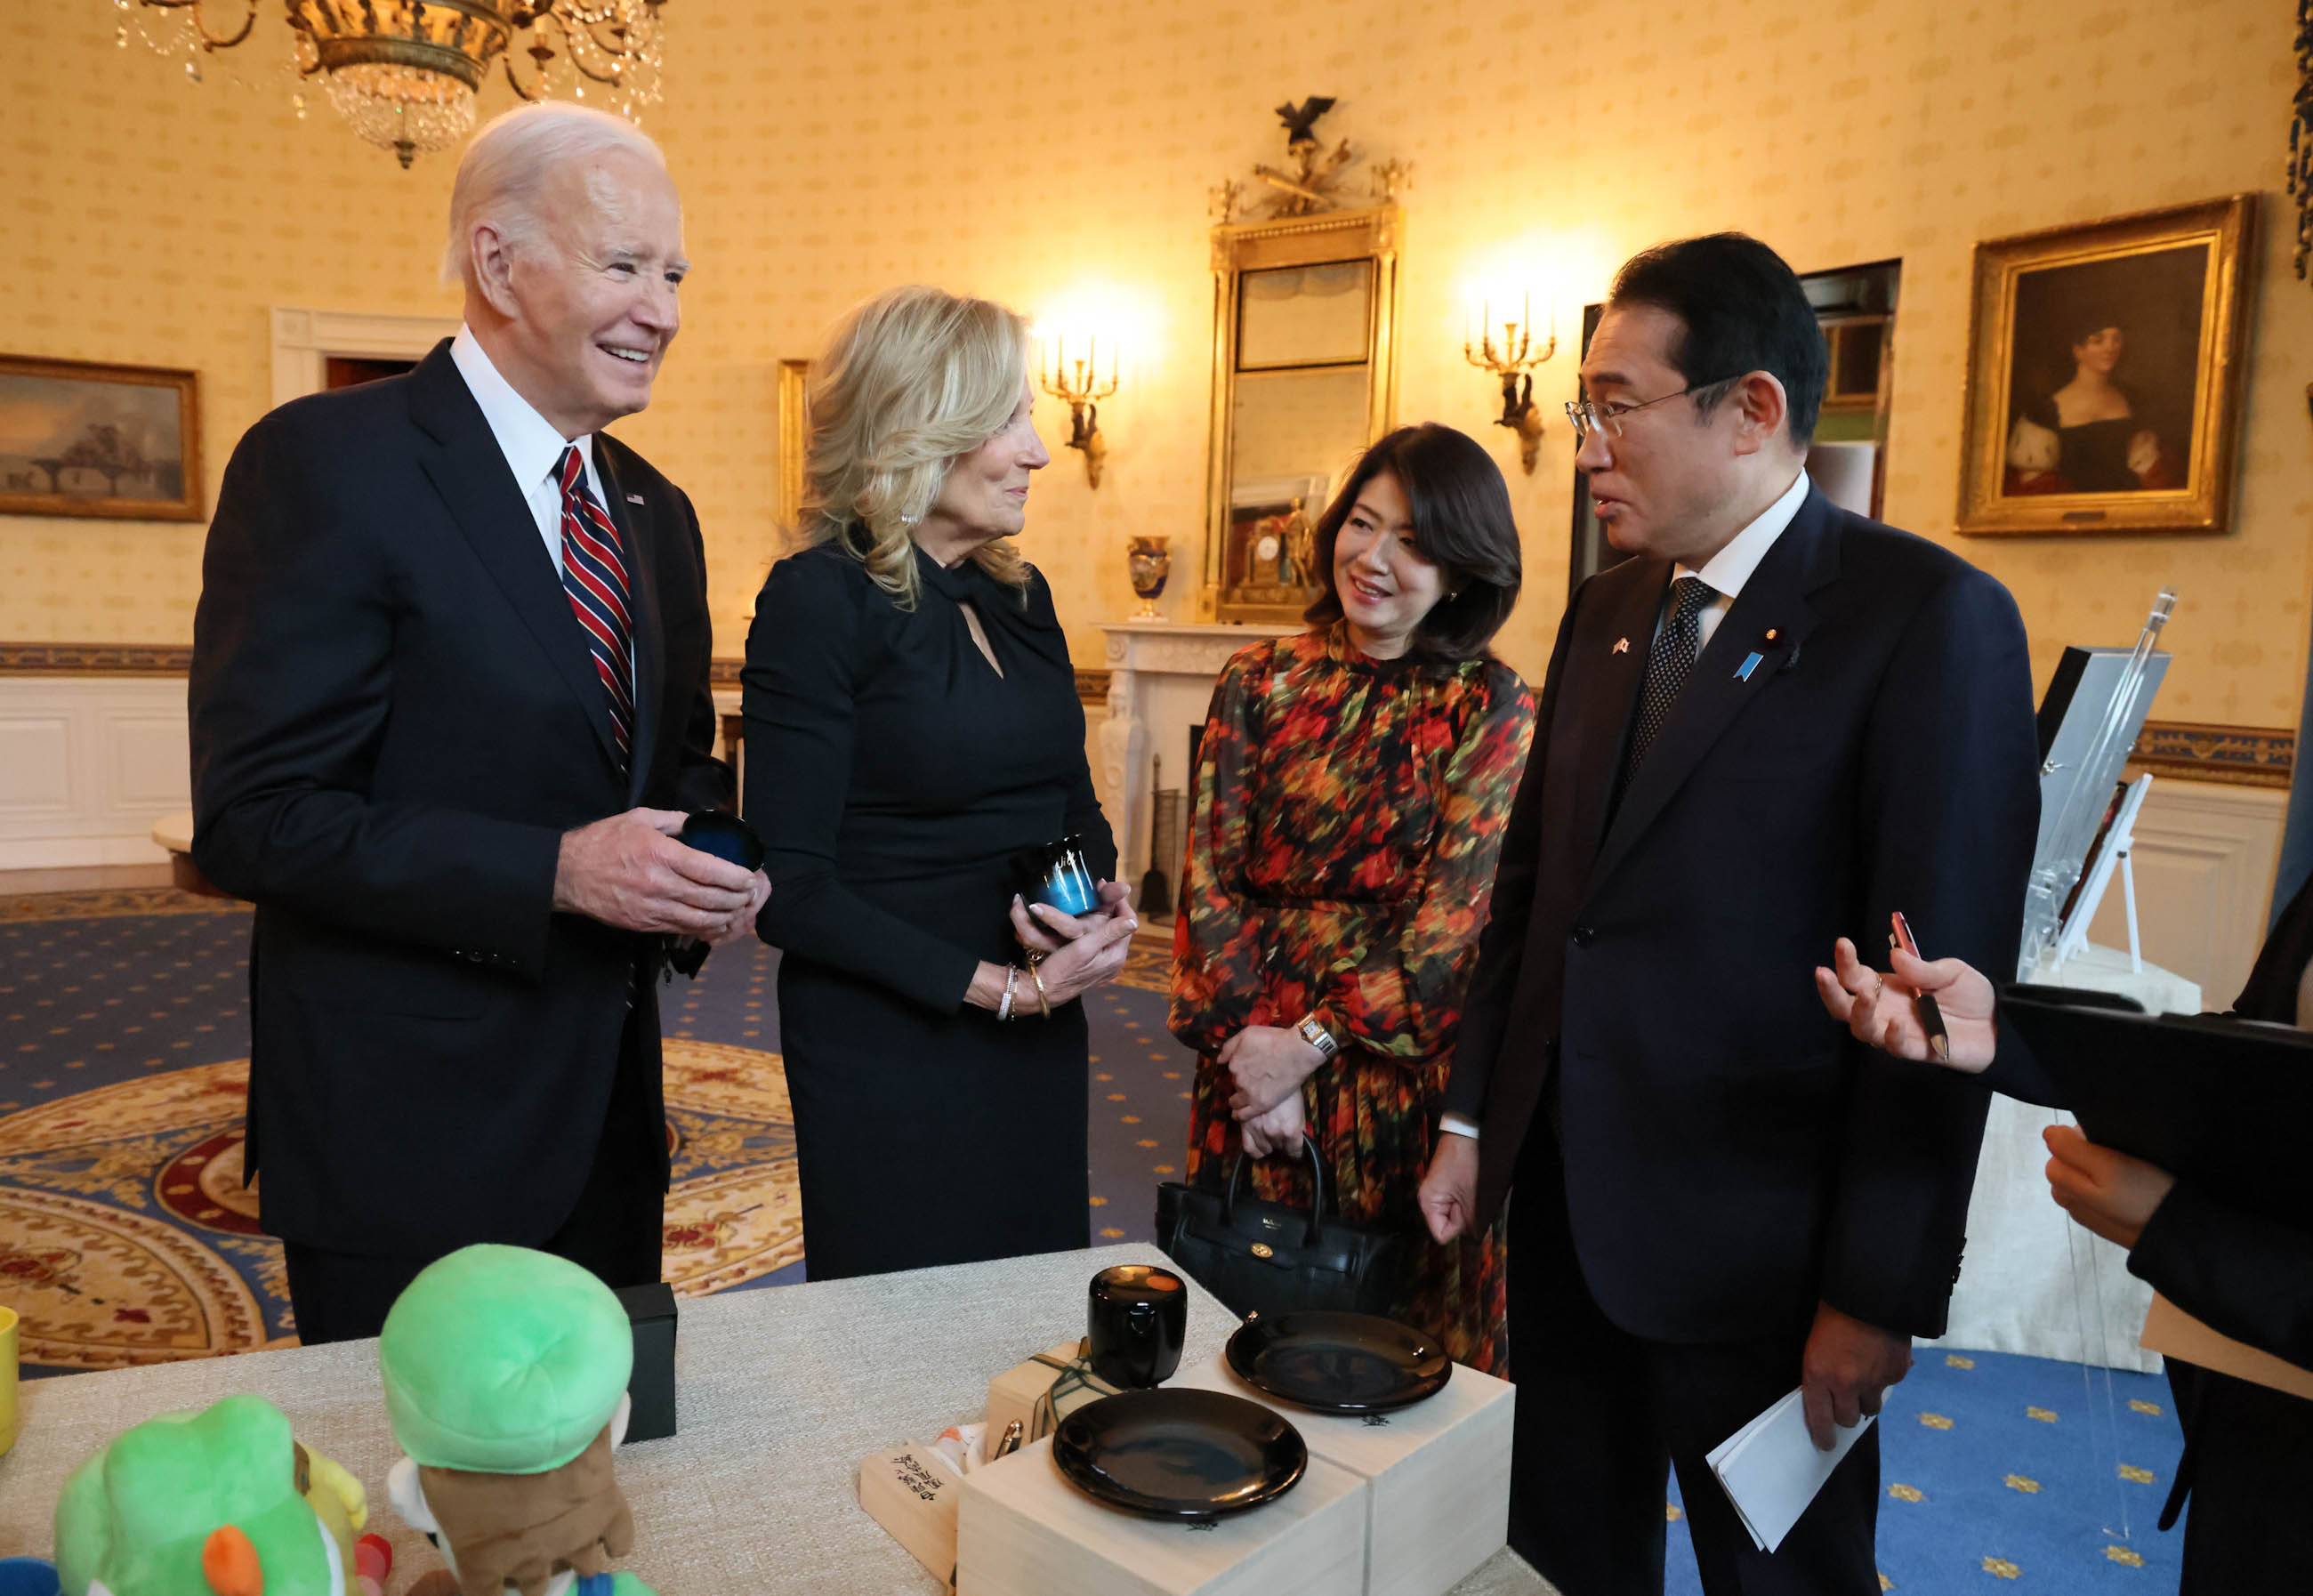 Event between Prime Minister Kishida, Mrs. Kishida, President Biden and Dr. Biden (1)